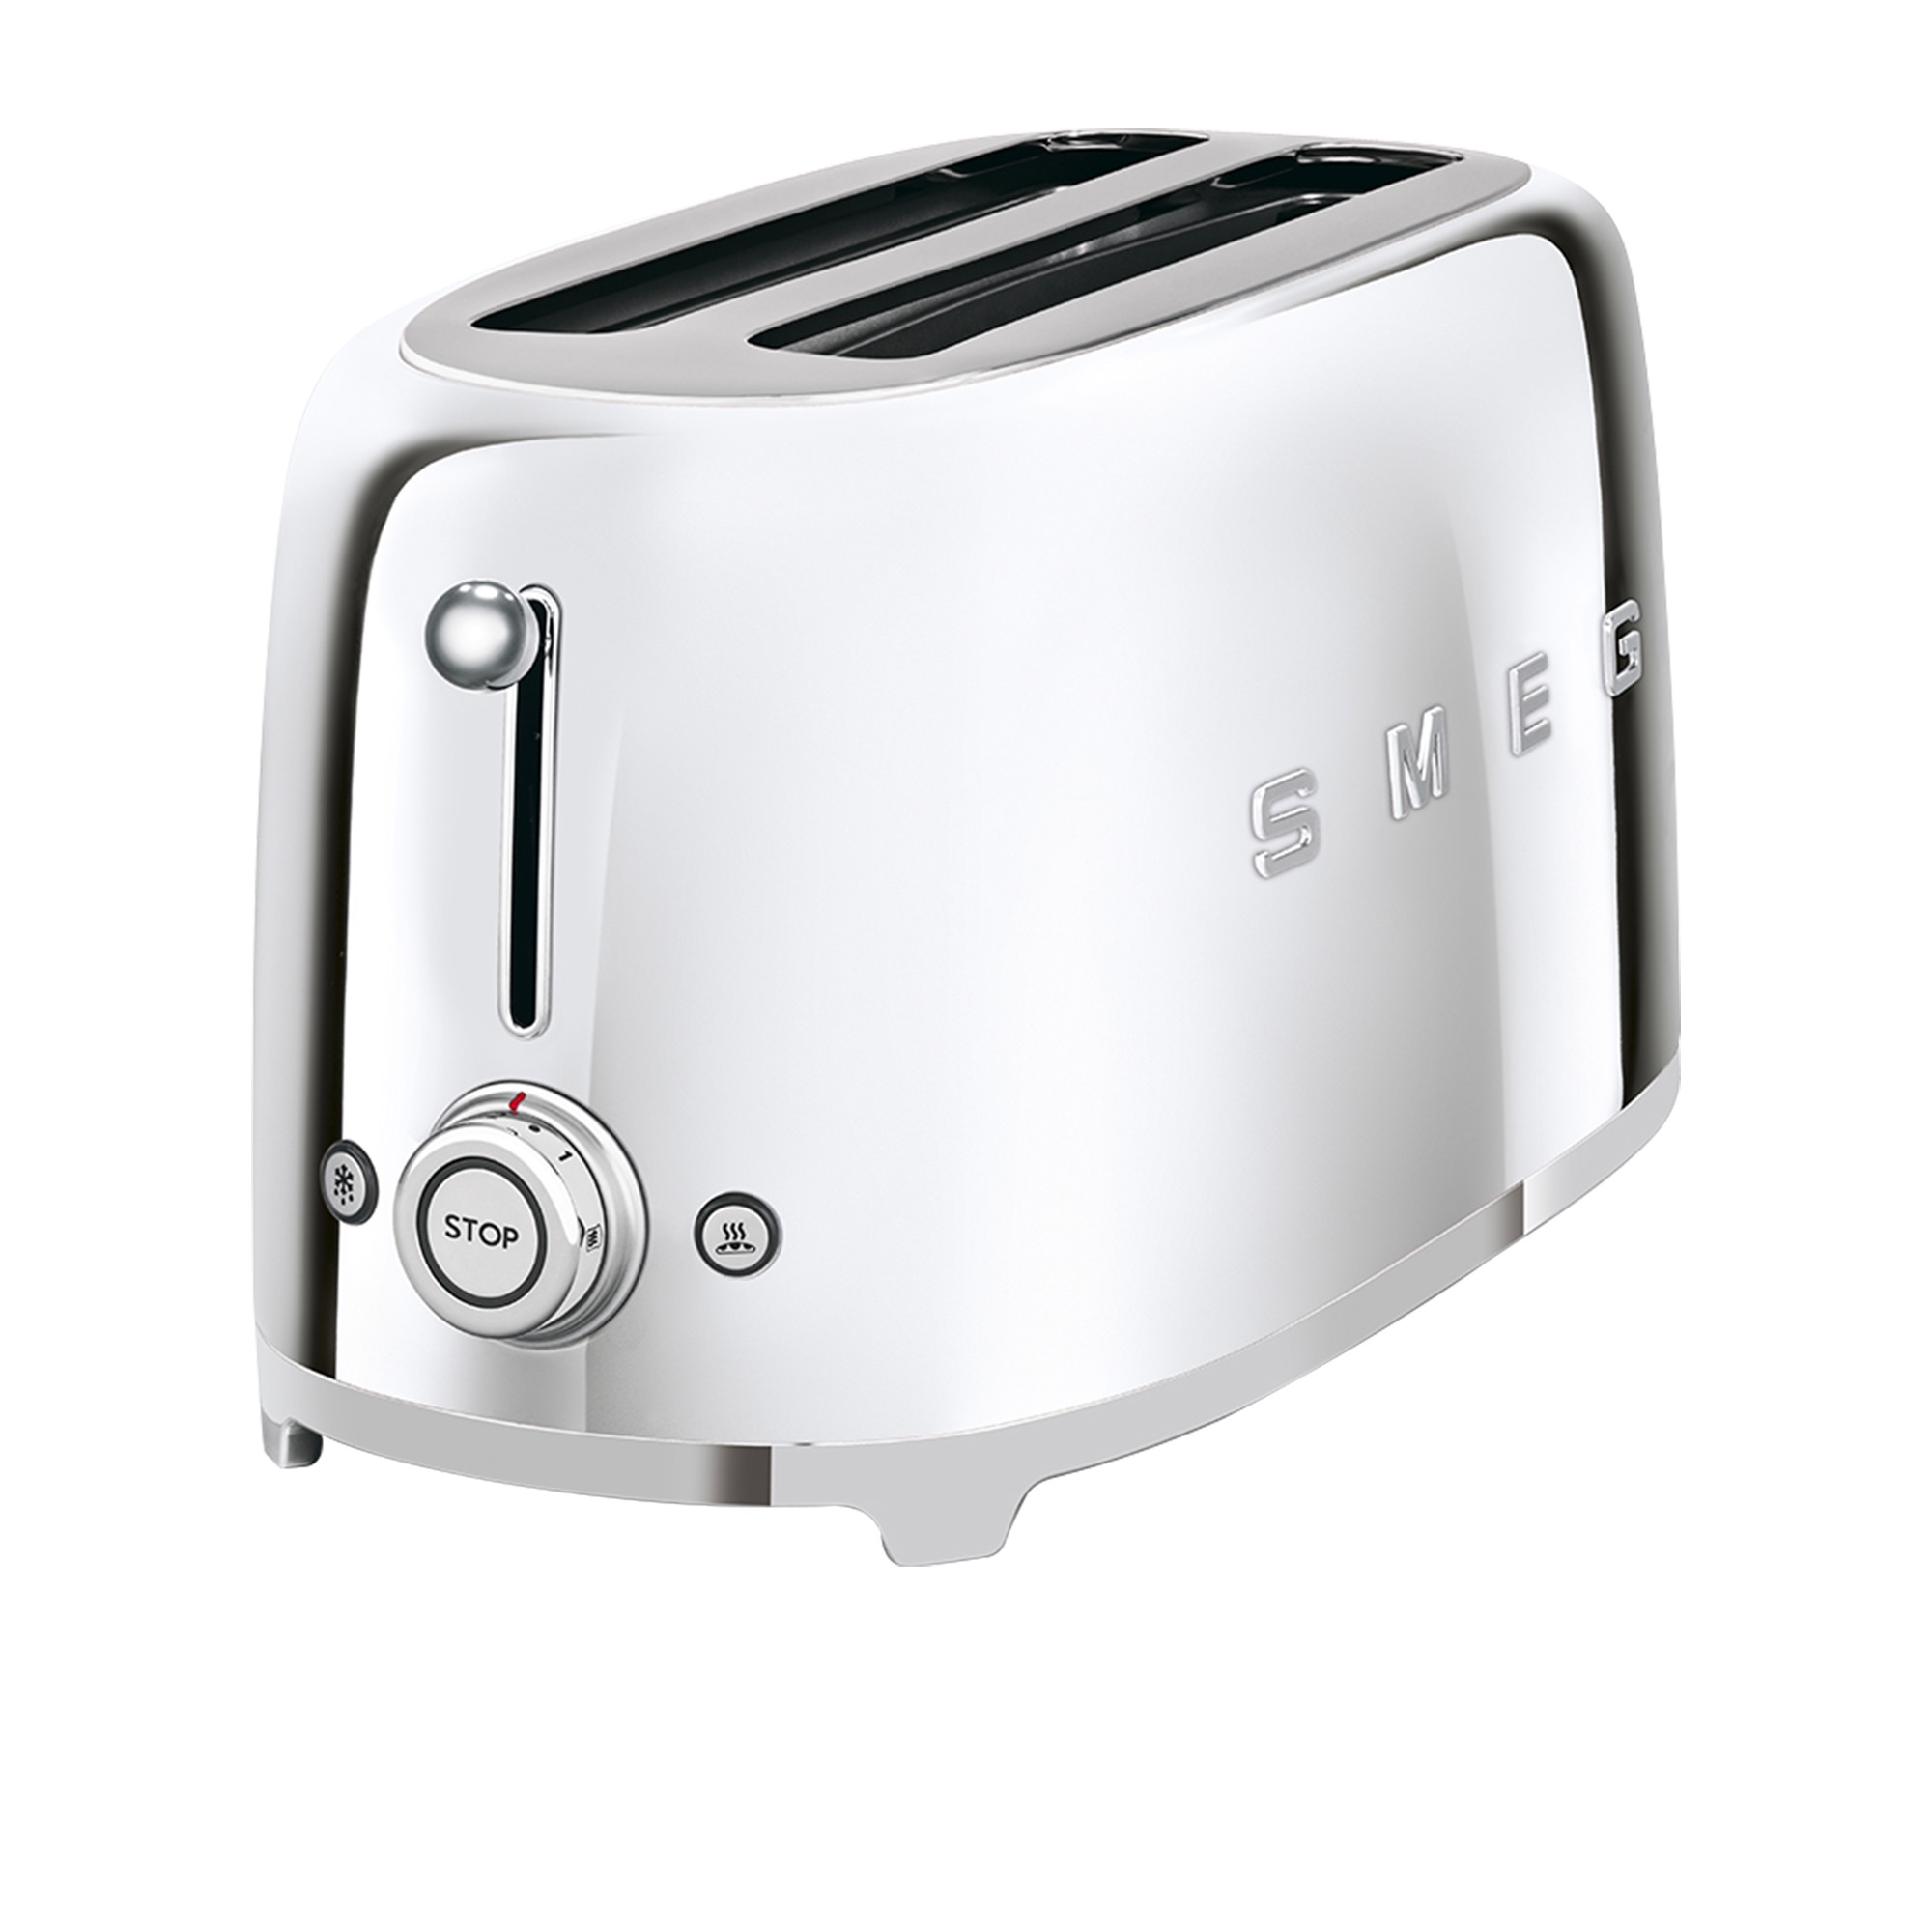 Smeg 50's Retro Style 4 Slice Toaster Chrome Image 1